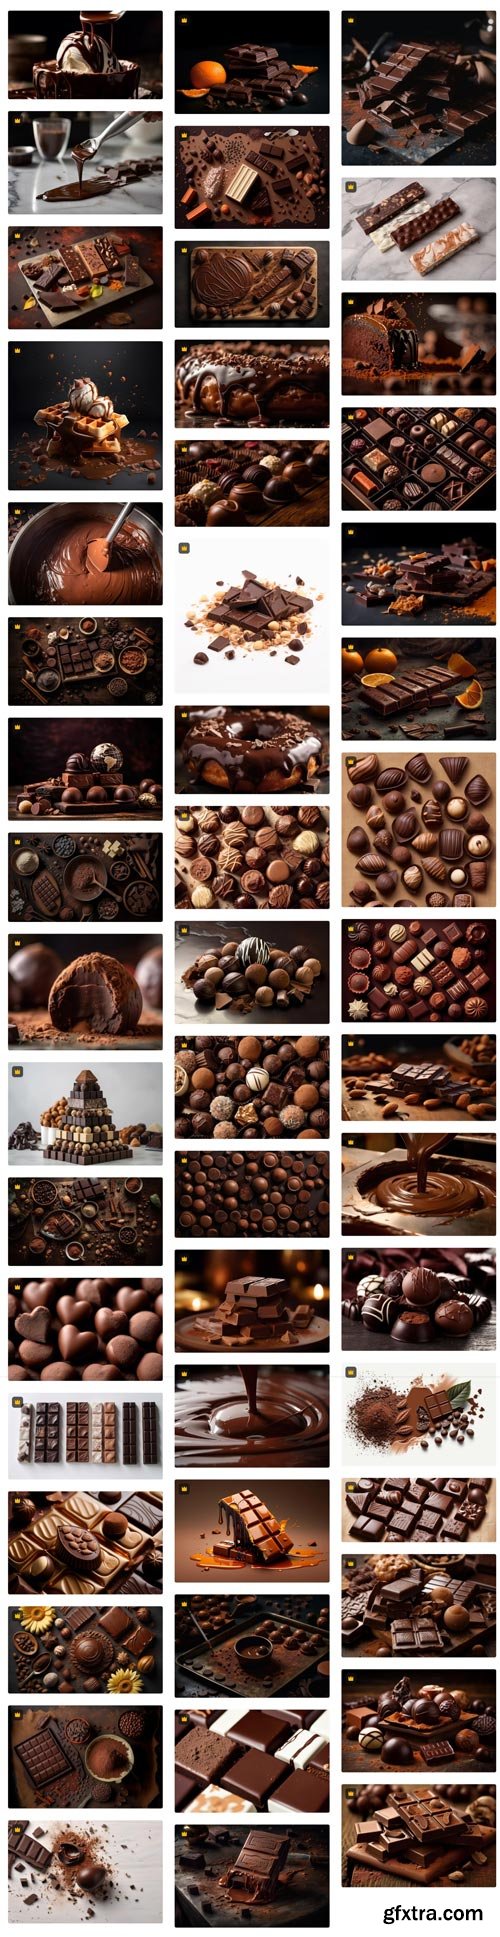 Premium Photo Collections - Chocolate AI - 80xJPG